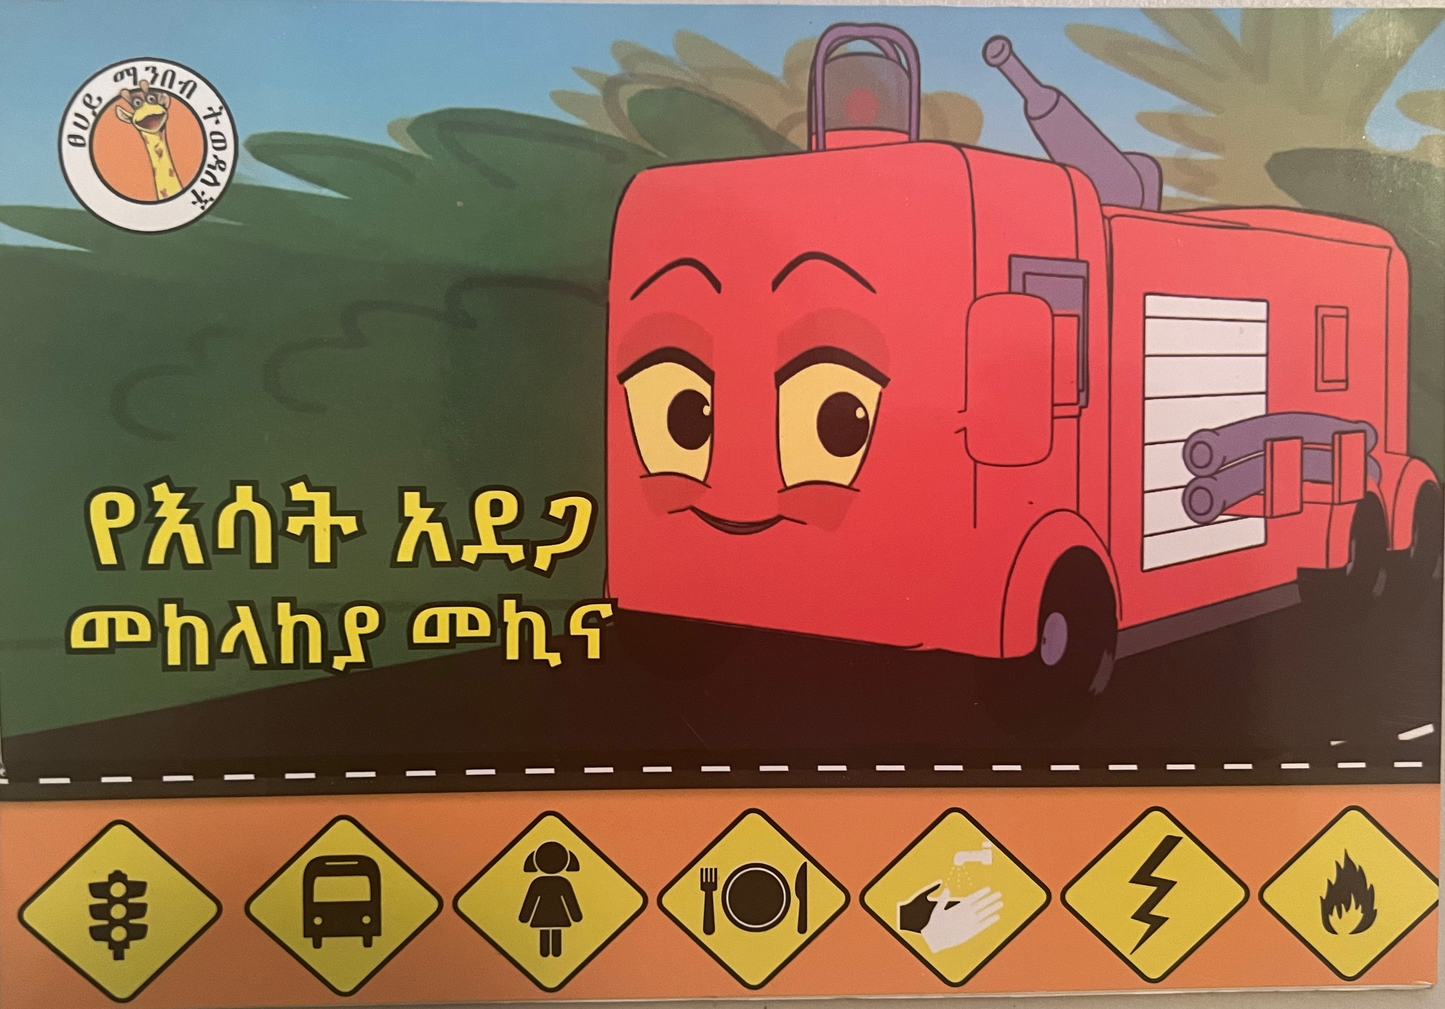 Amharic language textbook and storybook 6